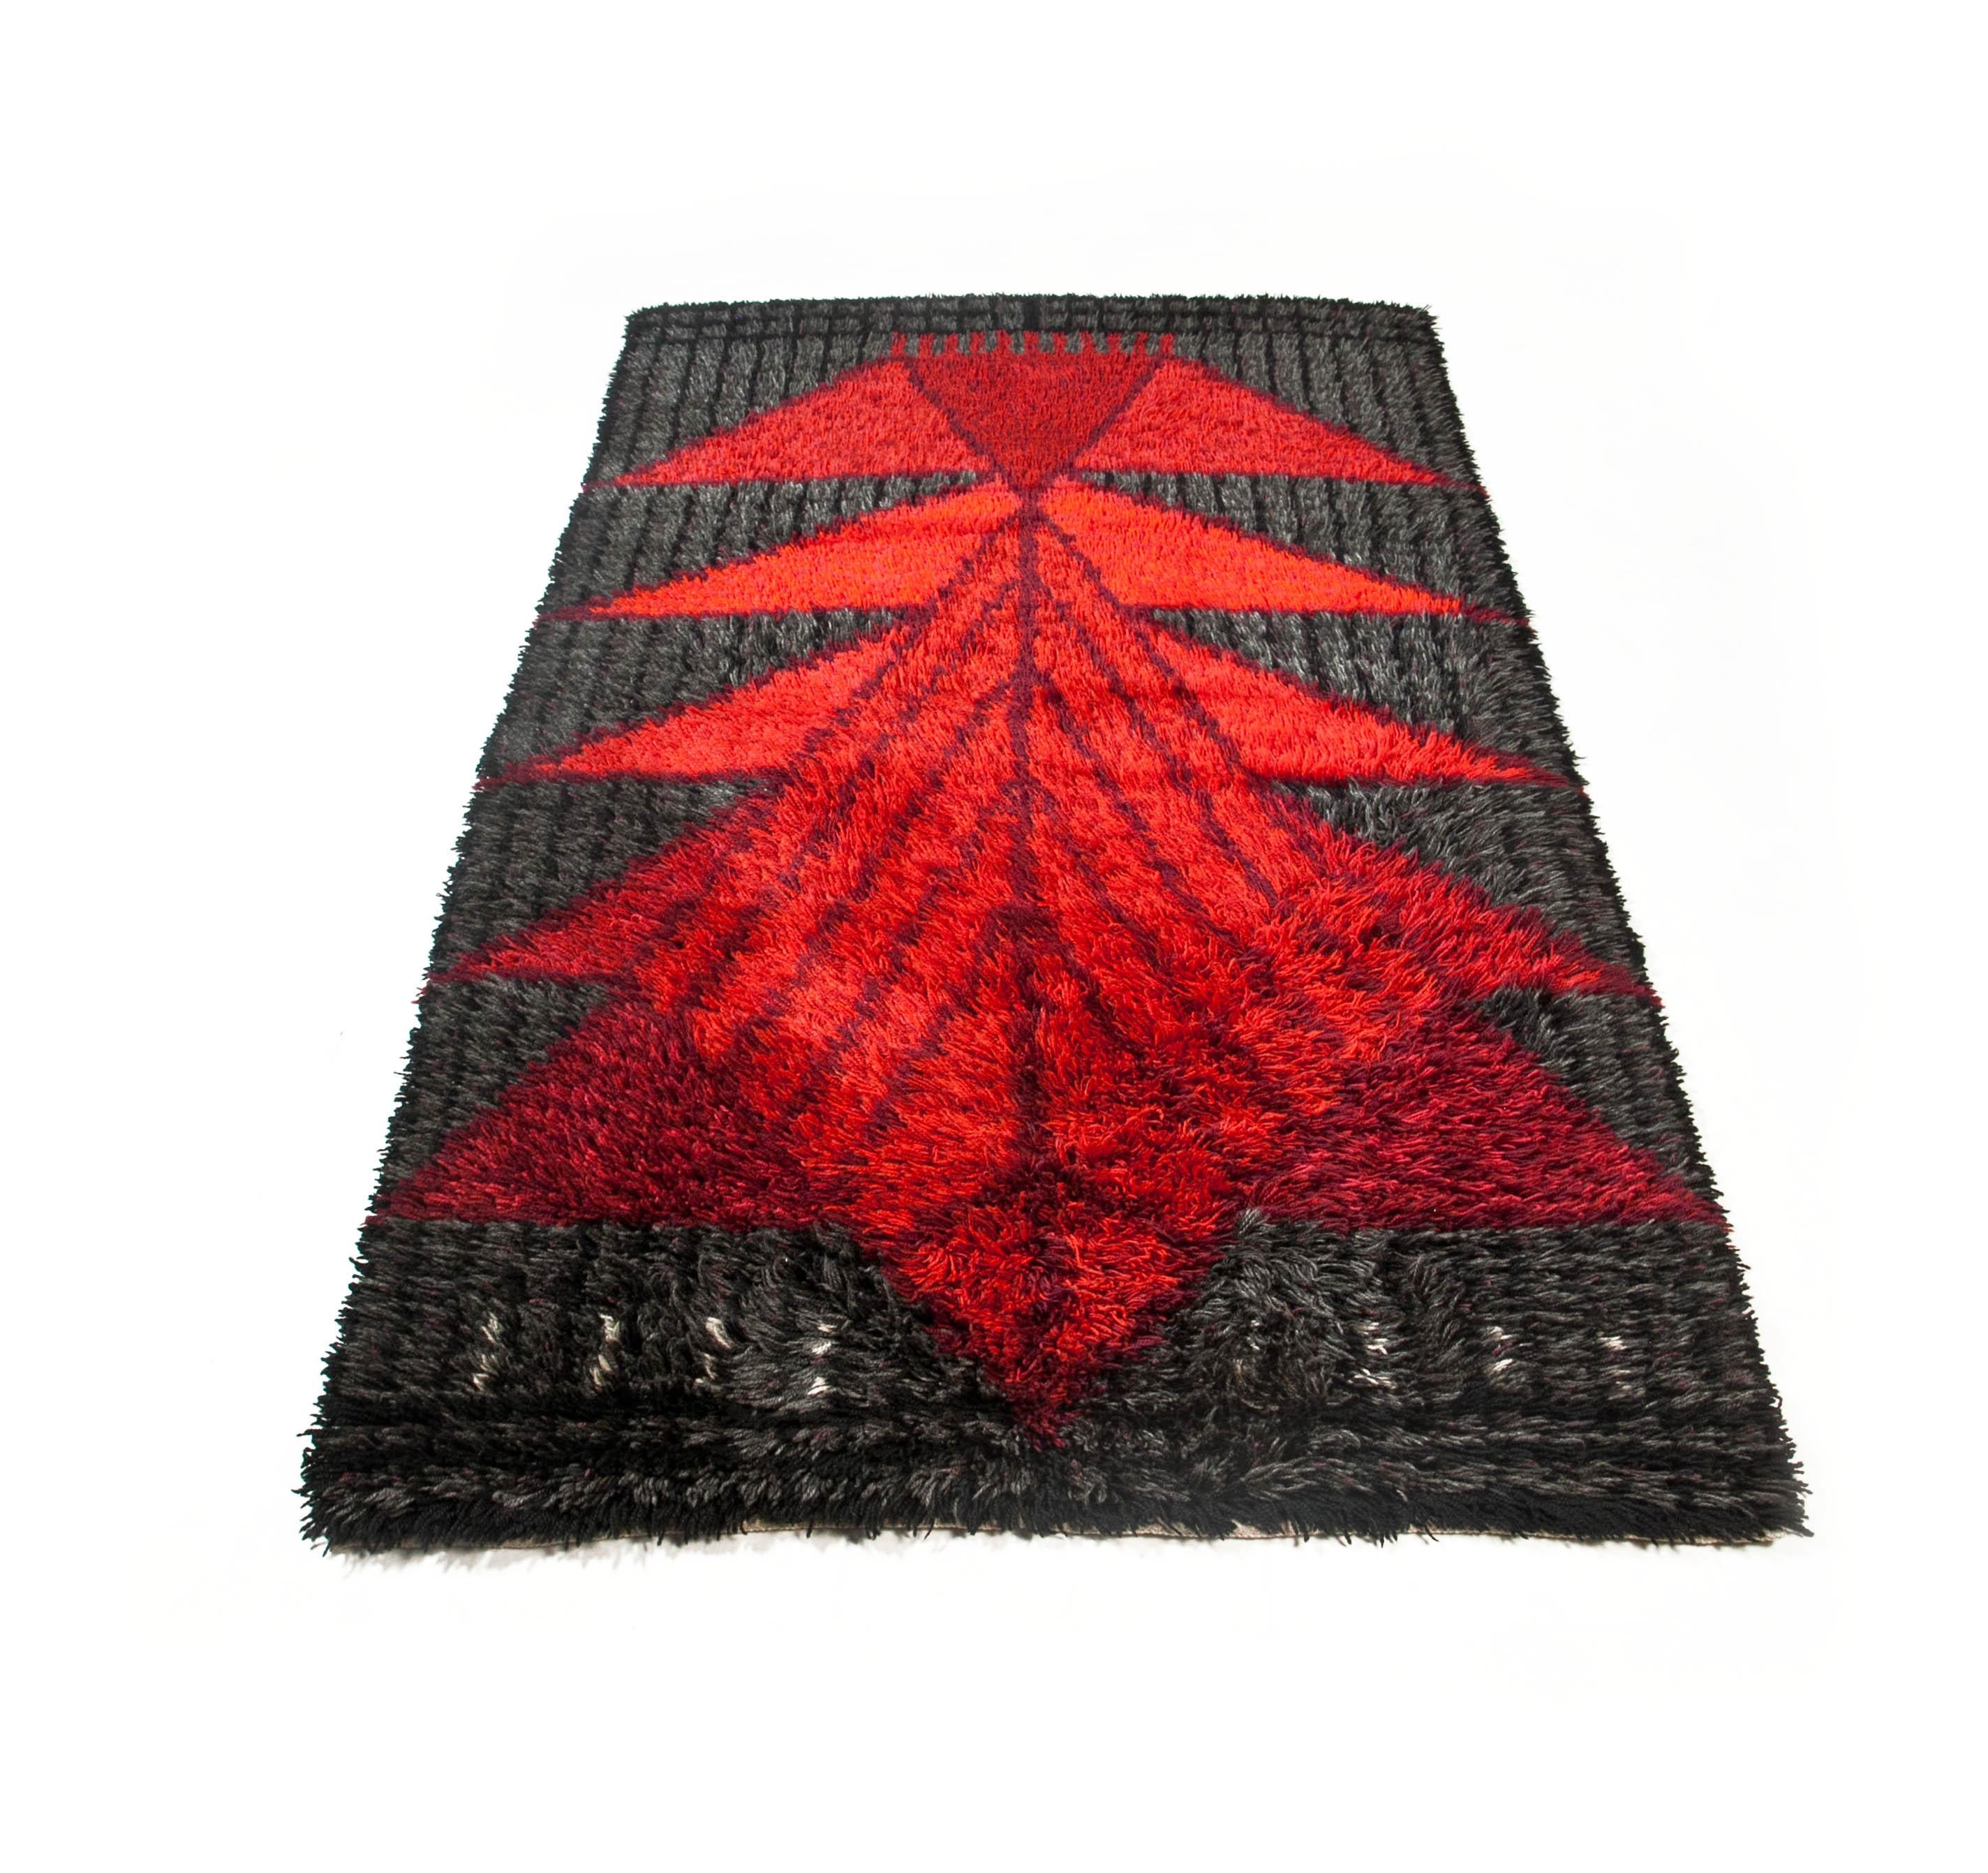 Vintage Swedish rya rug - Dark grey and red patterned - 82